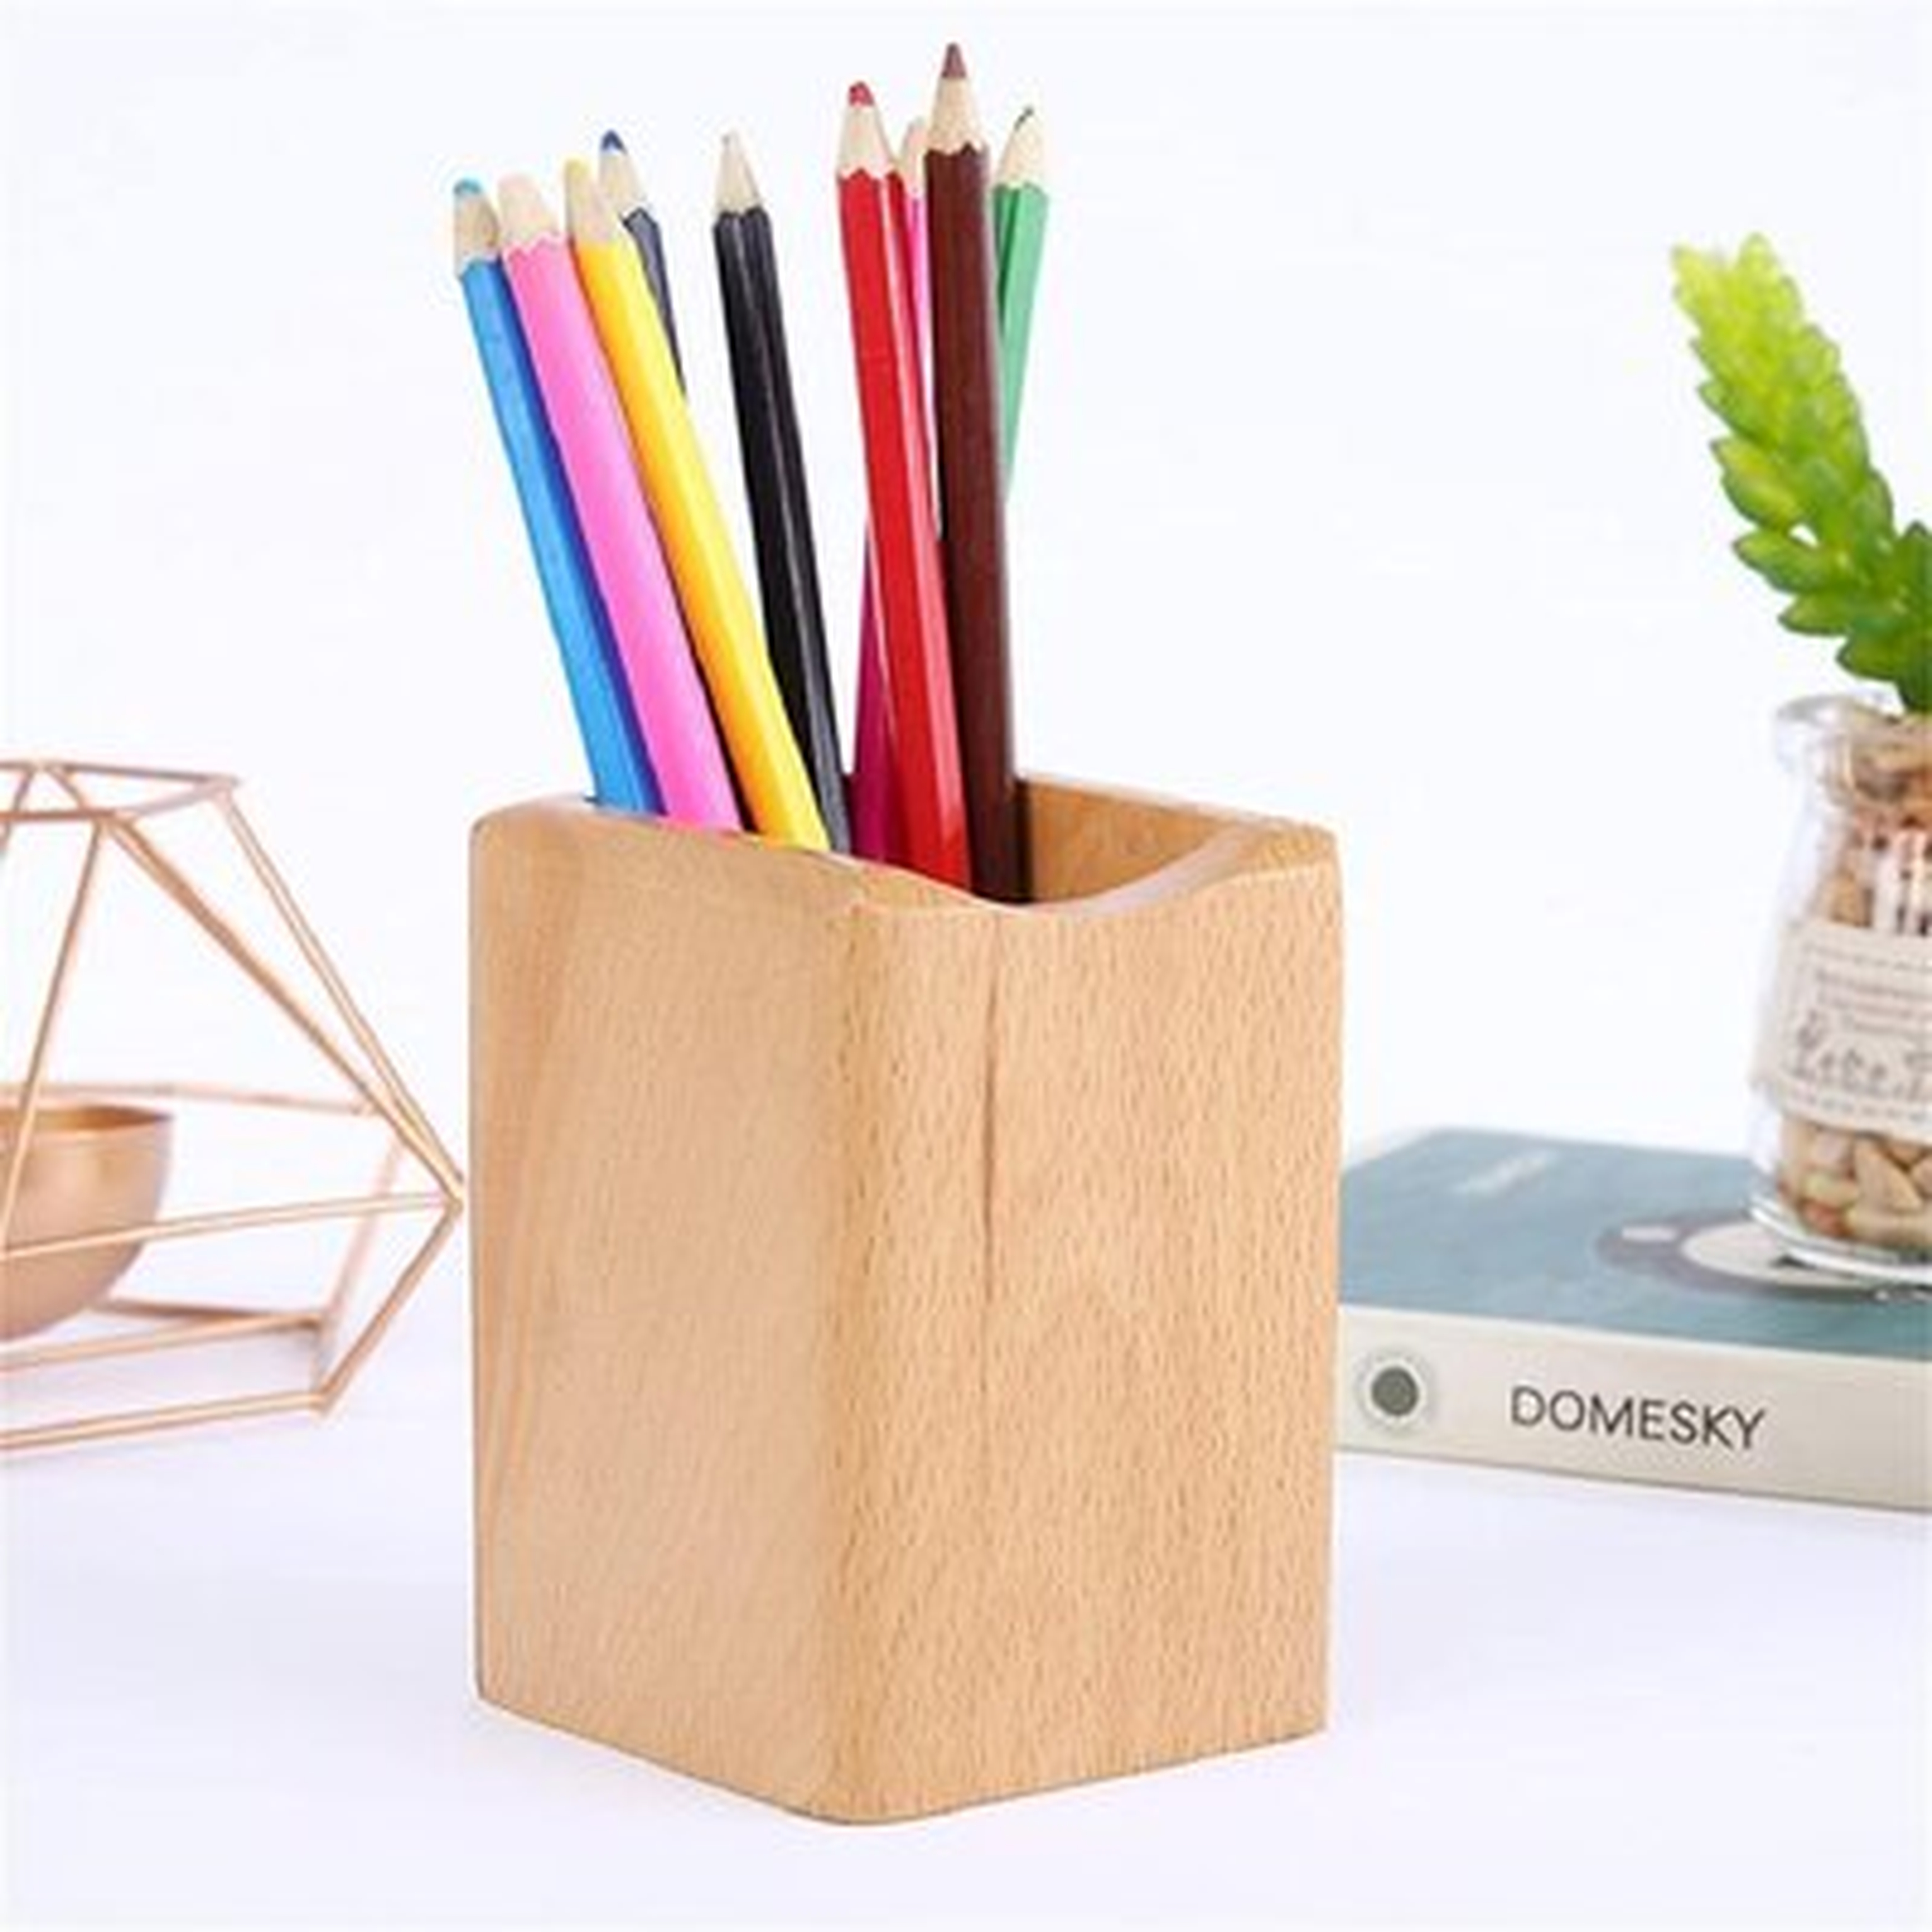 Pen Organizer Wooden Pencil Holder For Desk Pen Storage Holder Home Office Supplies - Wayfair